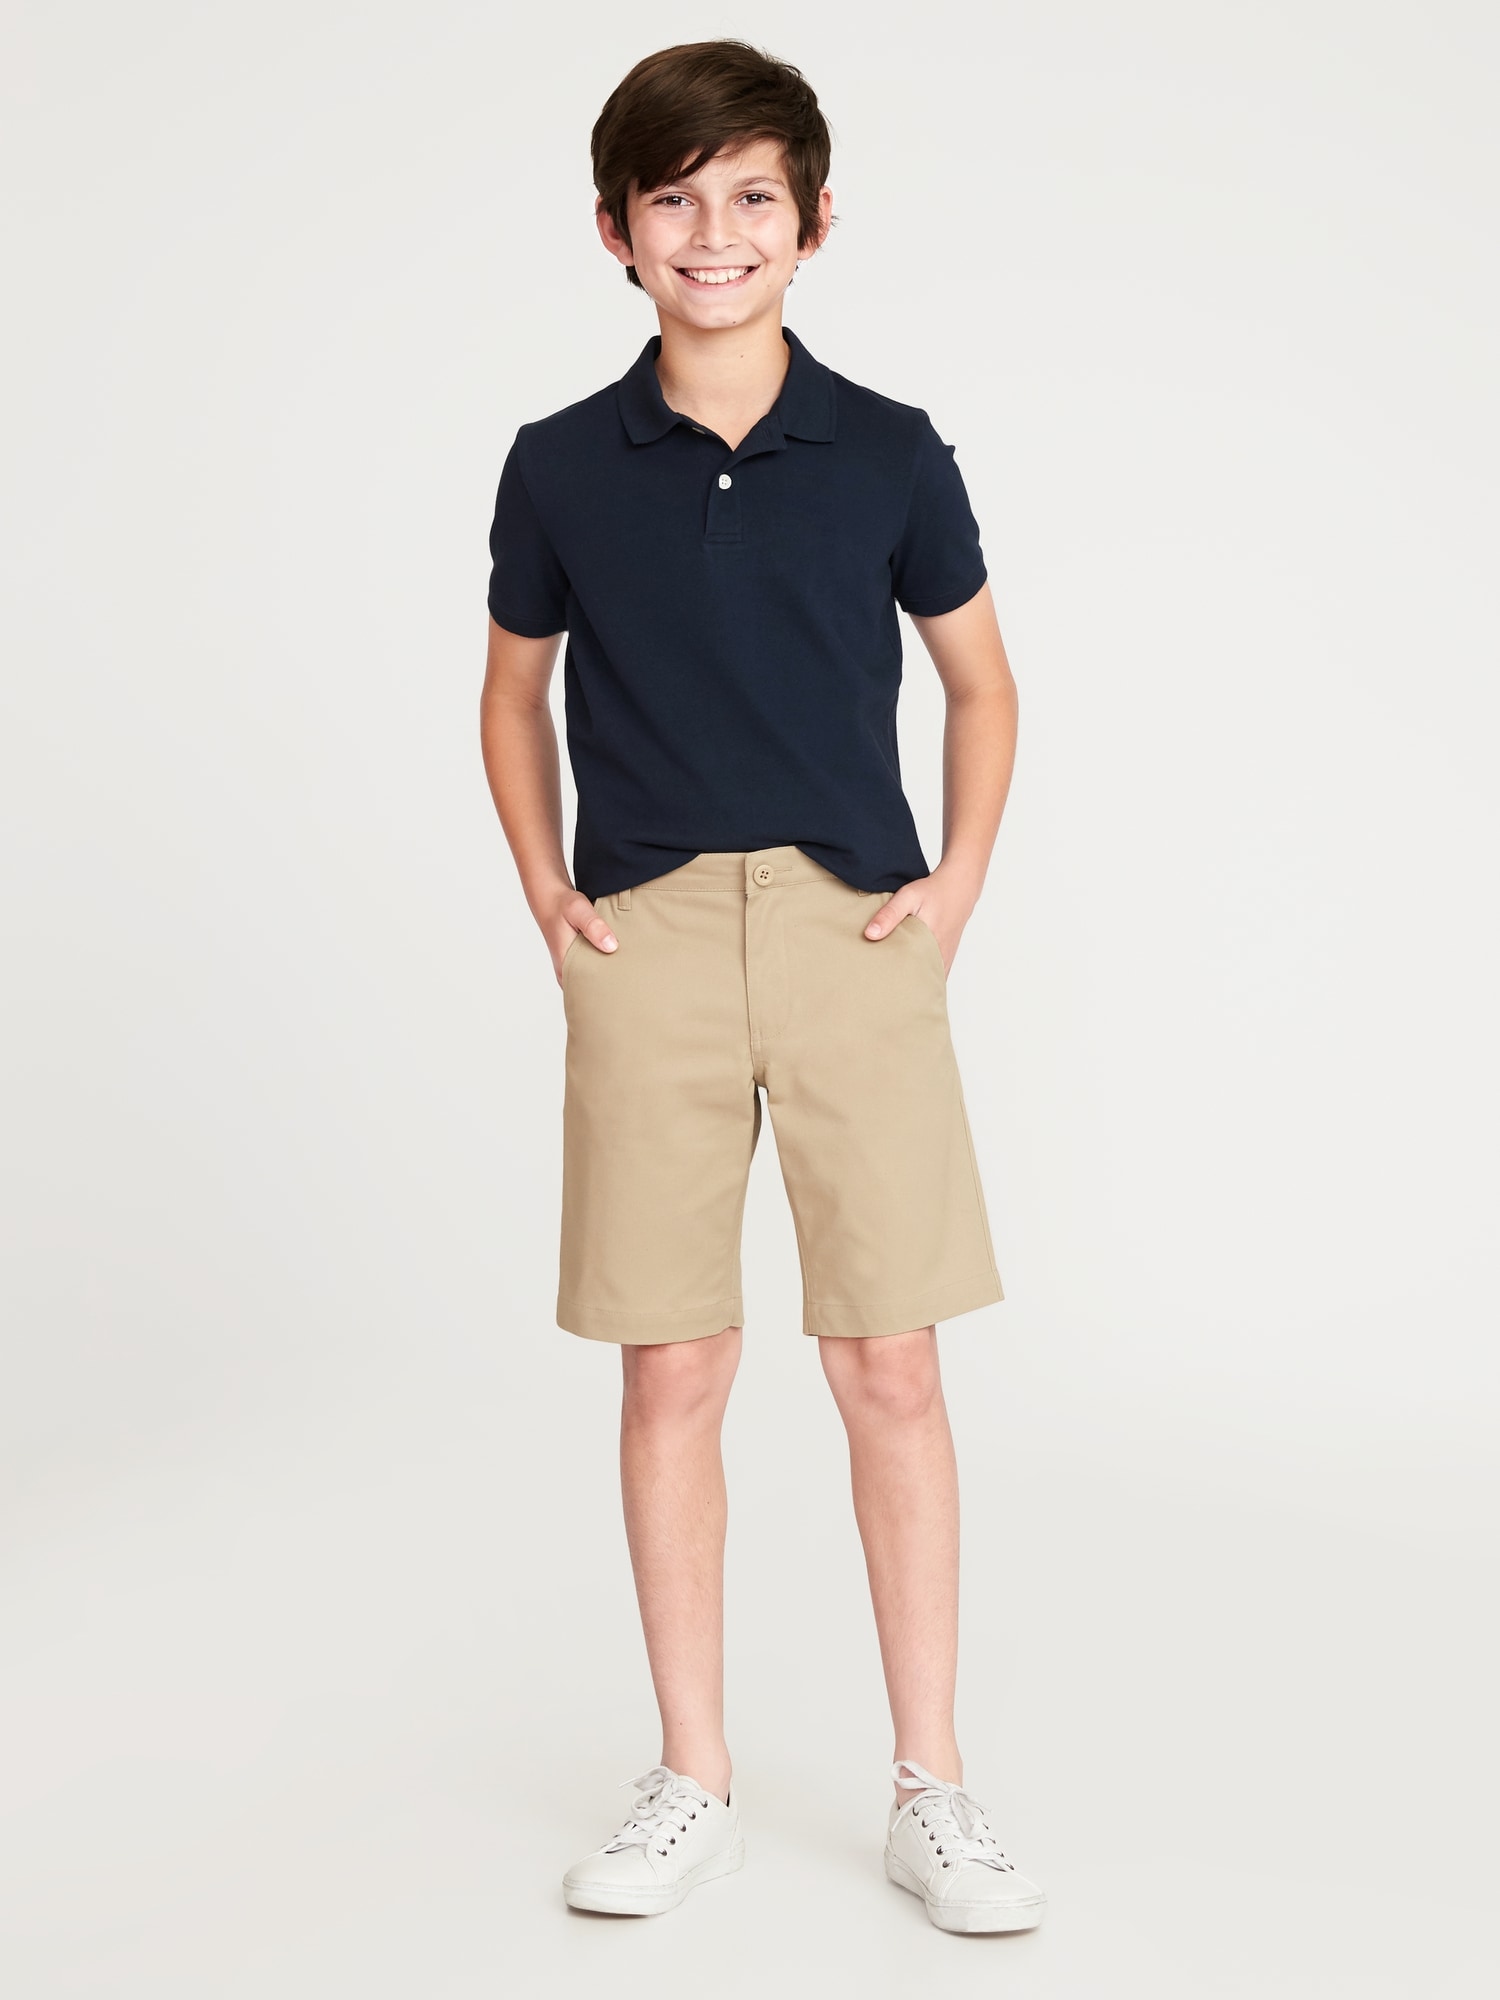 Details about   Boy's 3 Piece SET~TWILL Shorts & 2 ISLAND Shirts~Boy's Size 6/7 ~NEW w/ tags